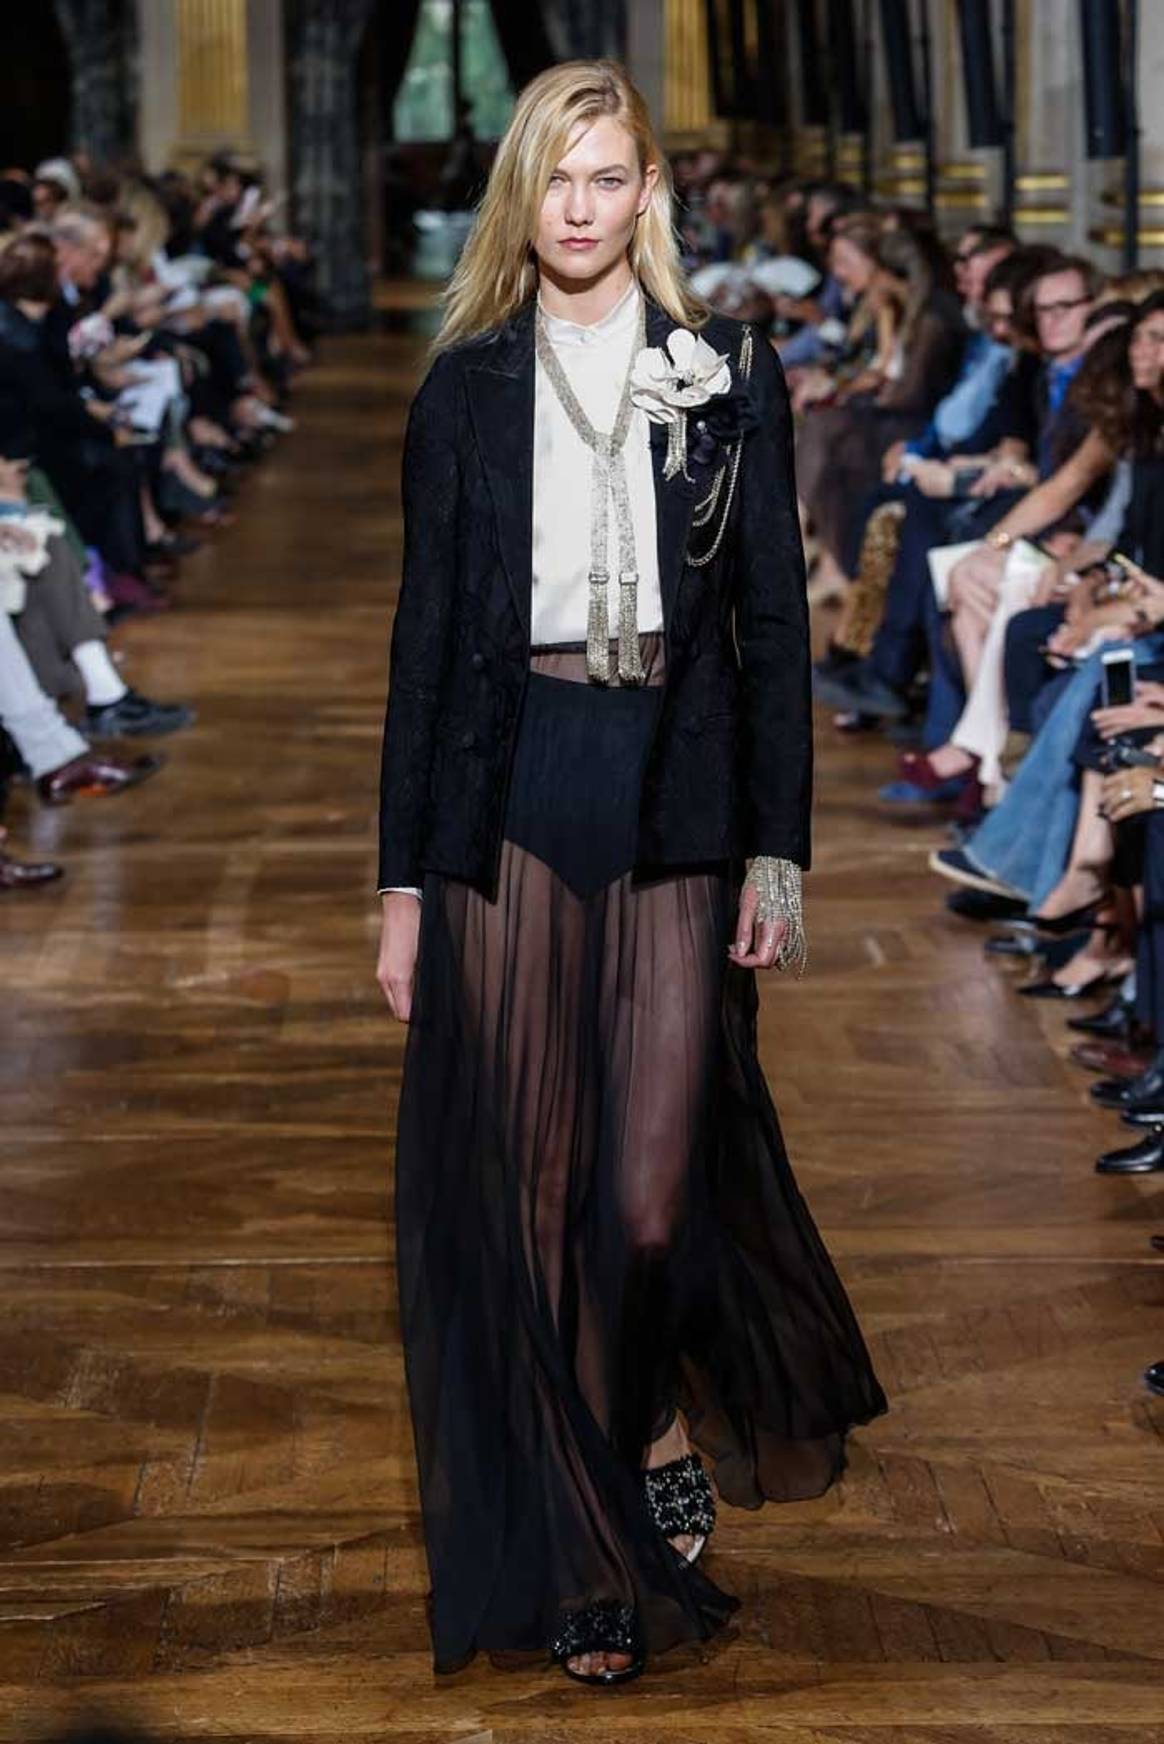 Jarrar lifts pall over Lanvin at Paris Fashion Week